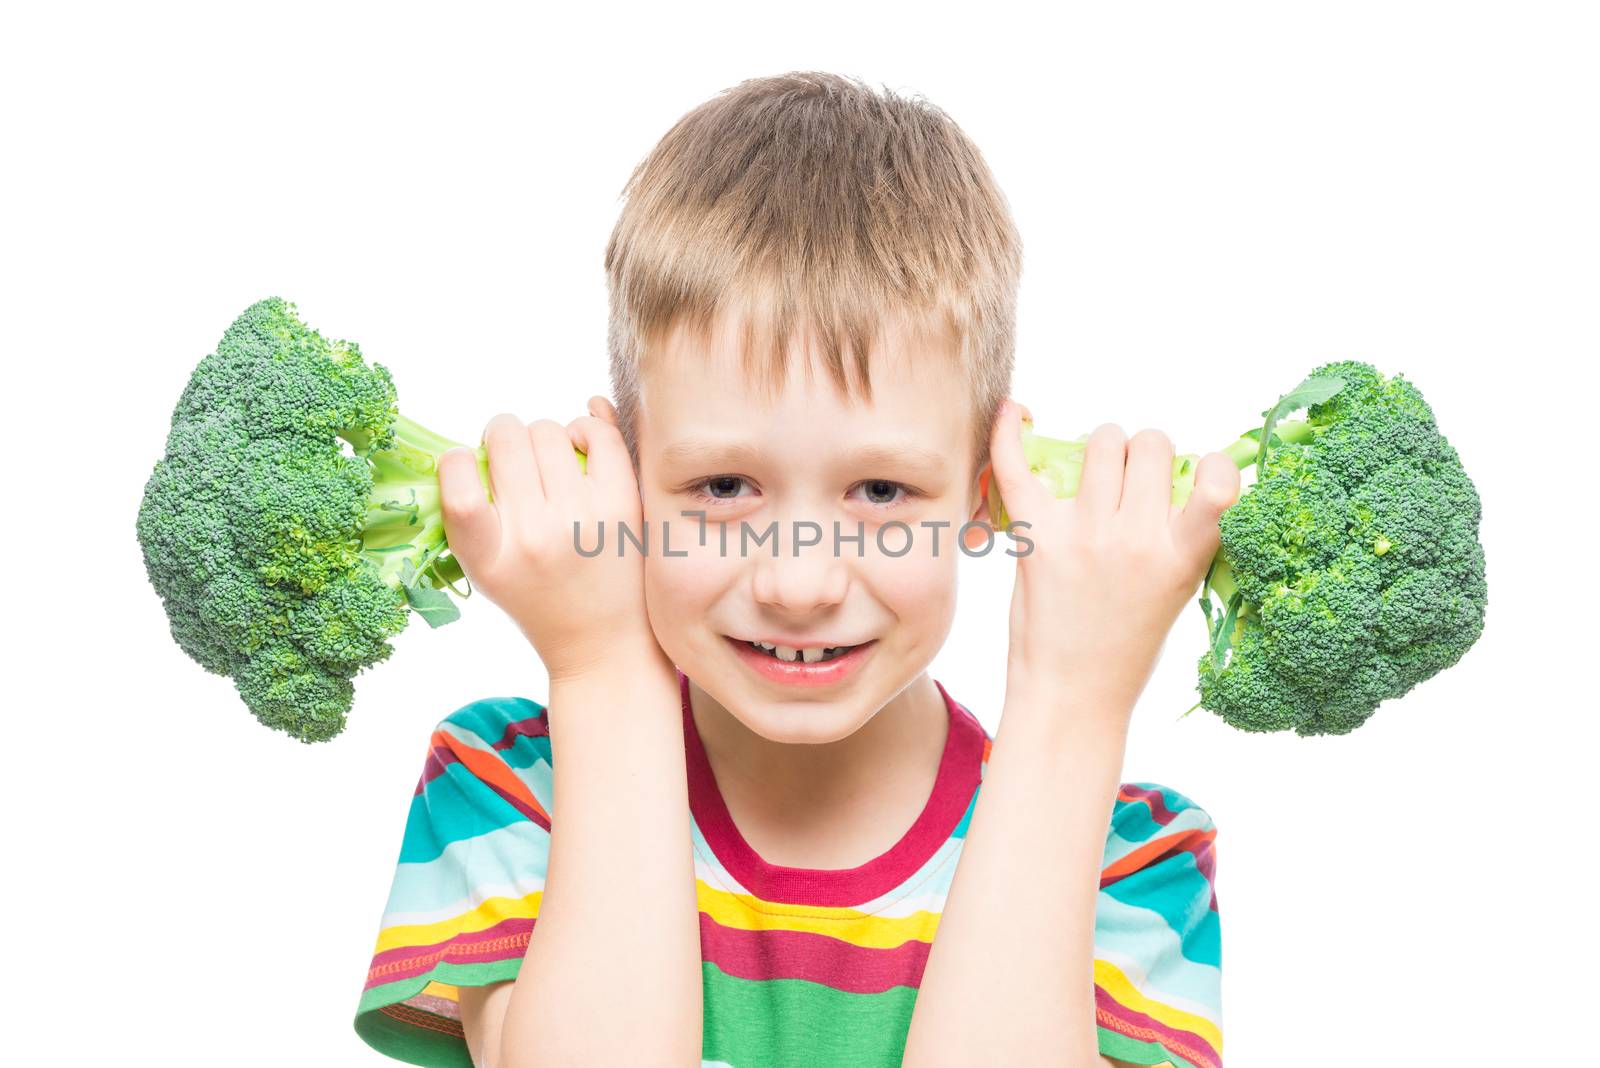 boy with broccoli, studio portrait on white background isolated by kosmsos111